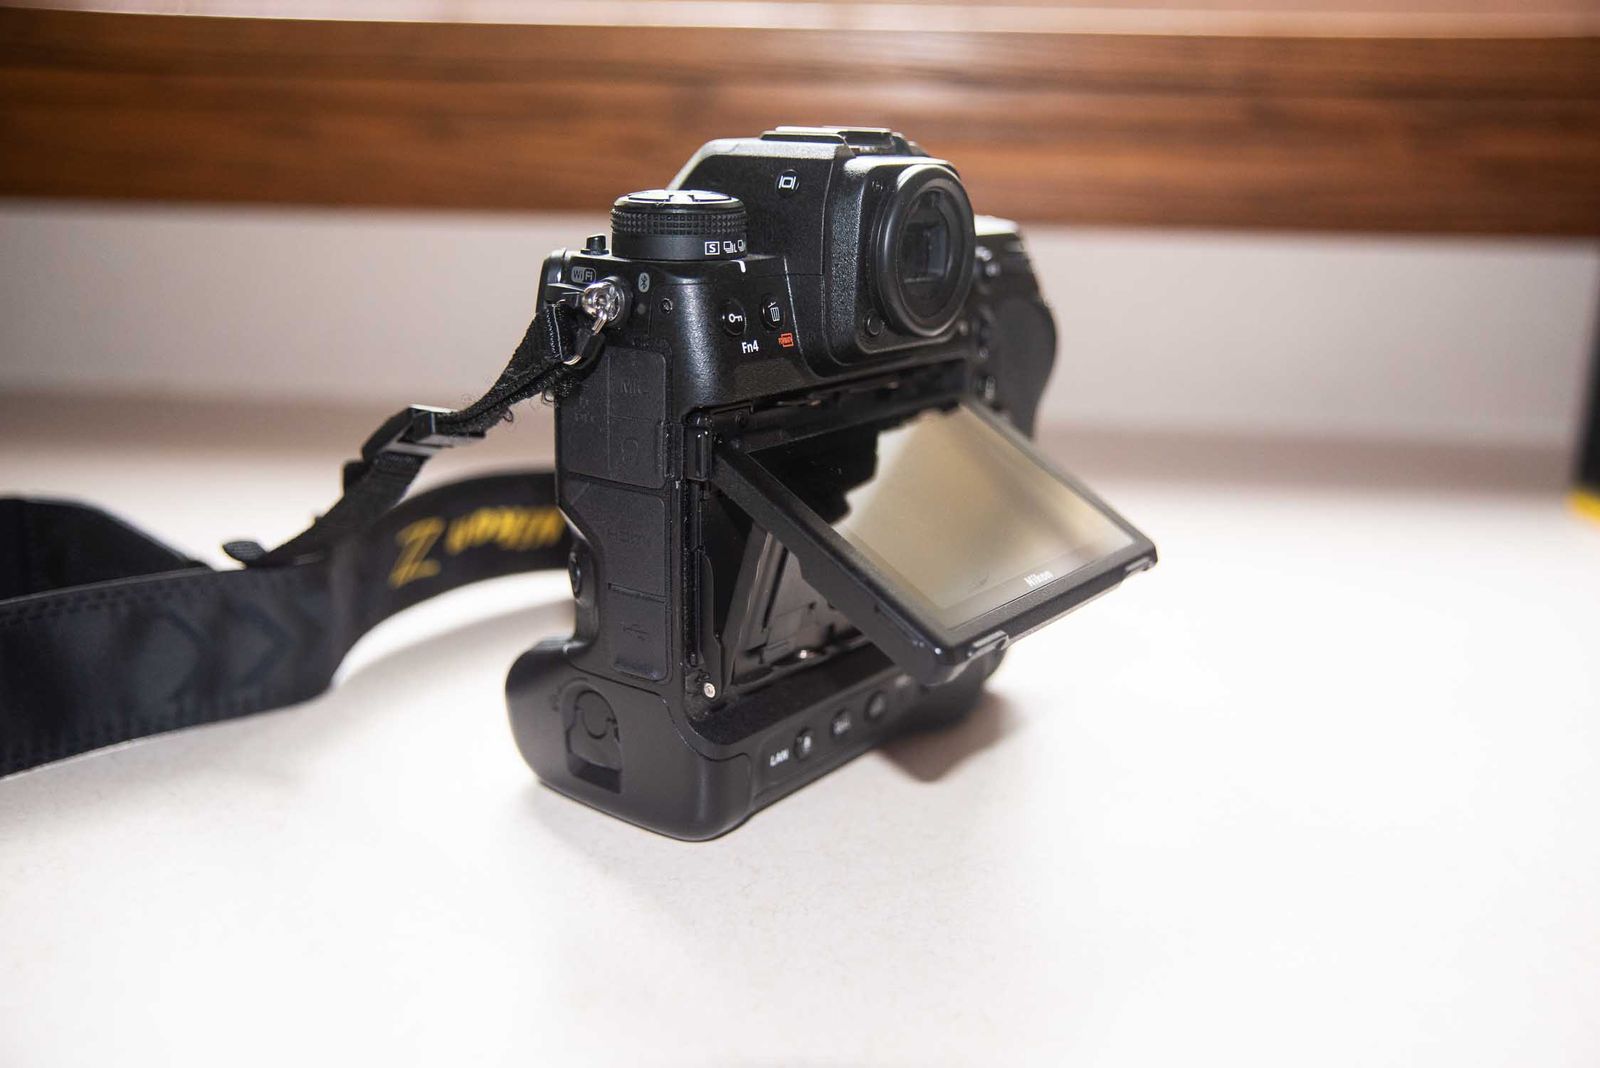 Nikon z9 Mirrorless Camera From Sugar Bush Design On Gear Focus